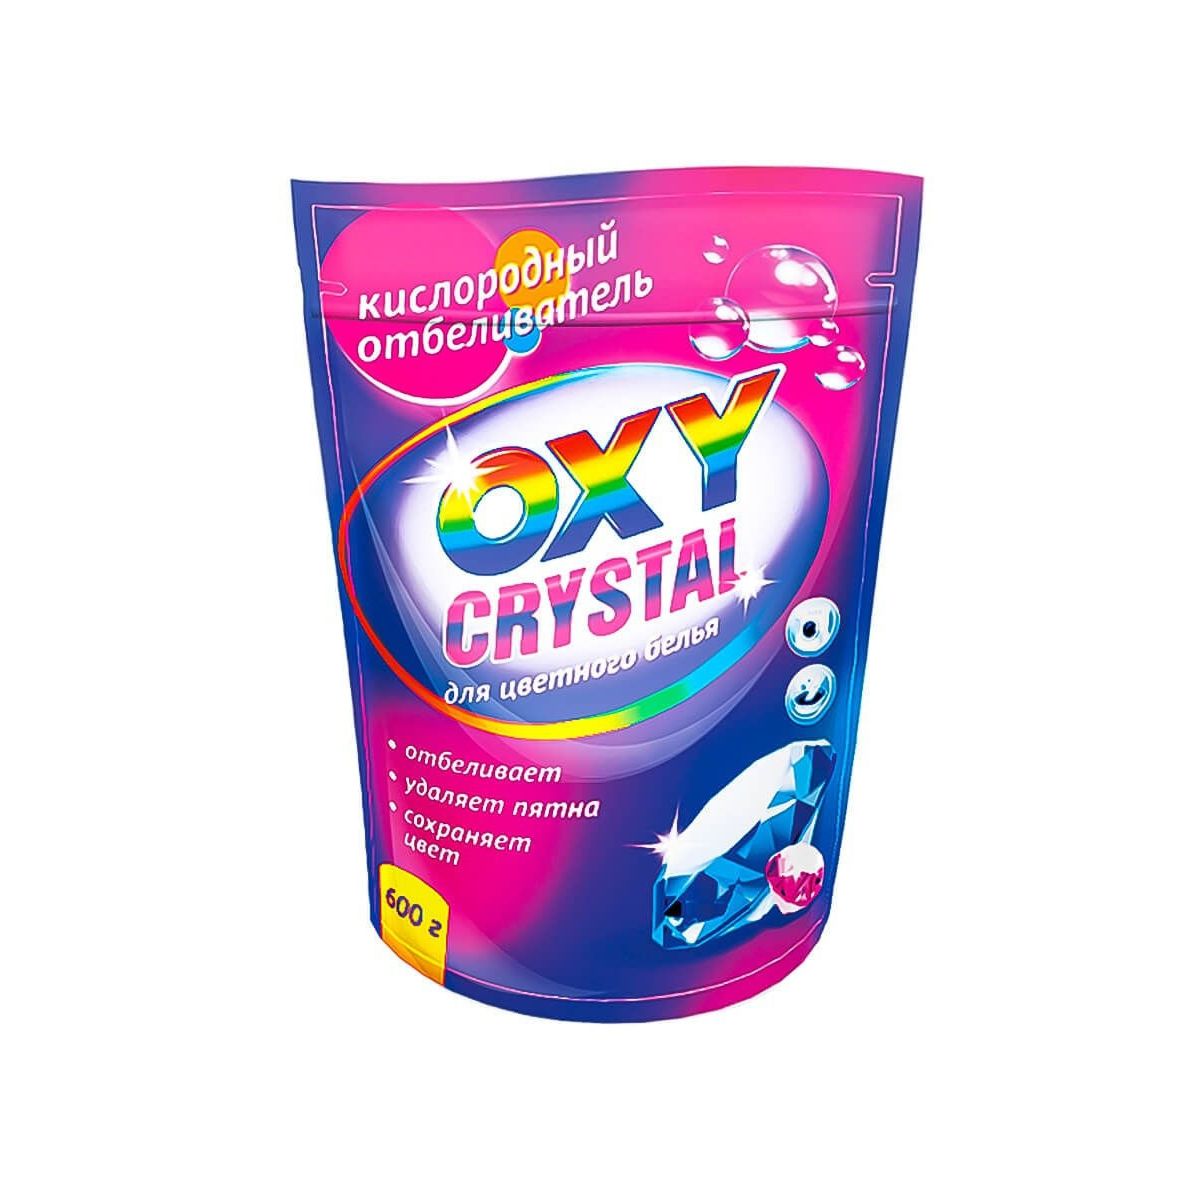 Oxy crystal. Кислородный отбеливатель oxy Crystal для белого белья 600 г. Белизна кислородный отбеливатель. Отбеливатель для цветного белья. Кислородный отбеливатель для белья.